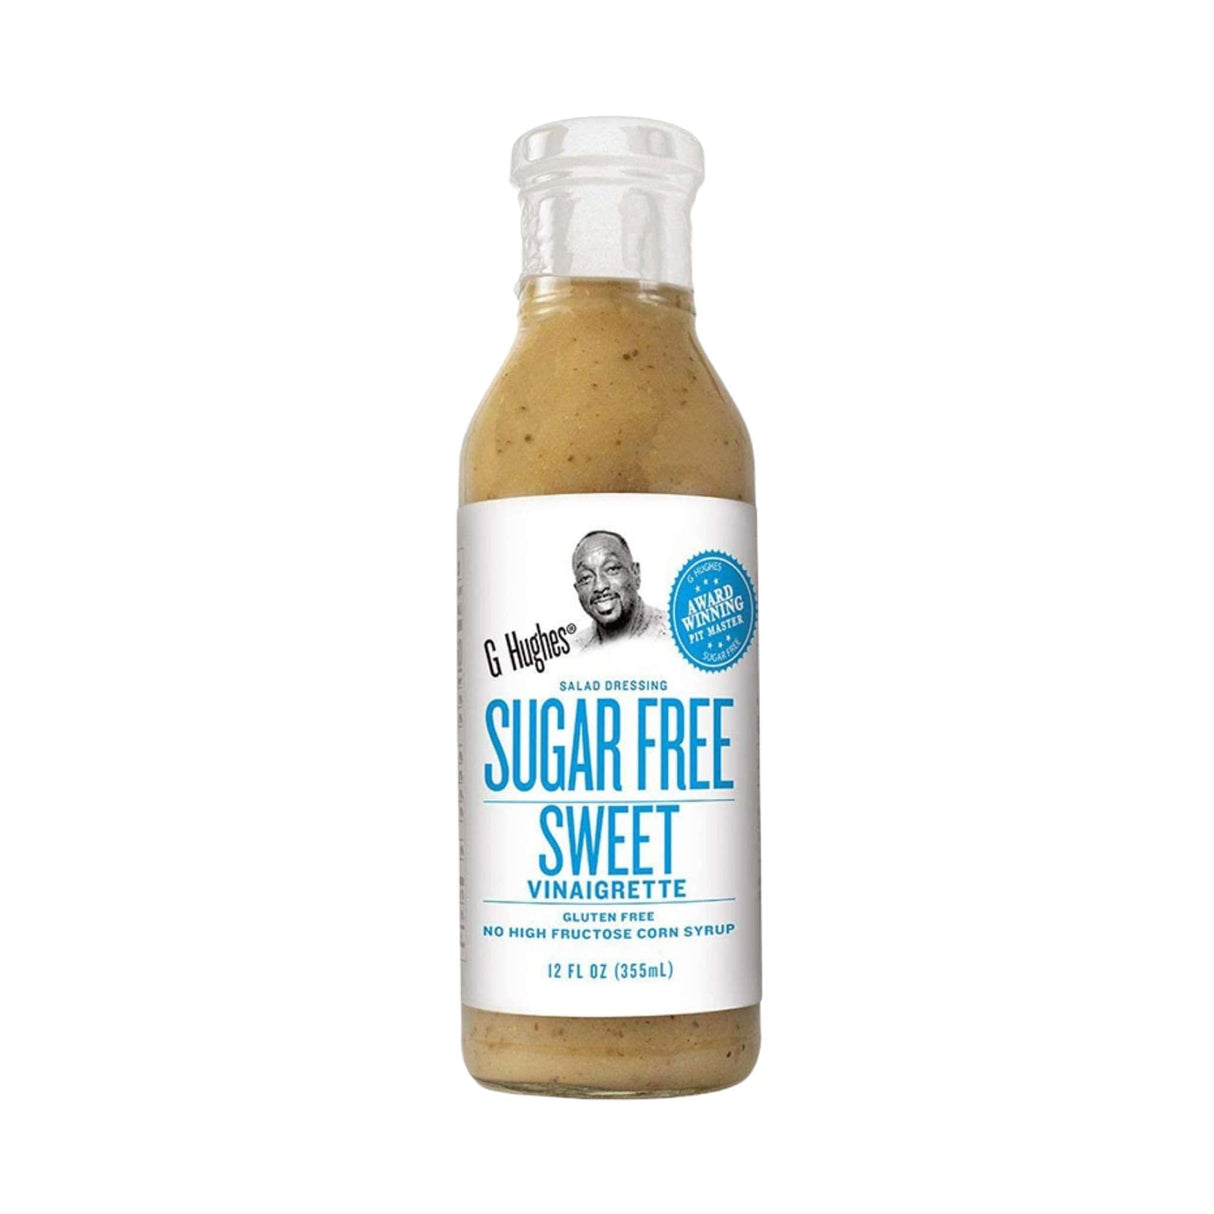 G Hughes Sugar Free Sweet Vinaigrette - hot sauce market & more